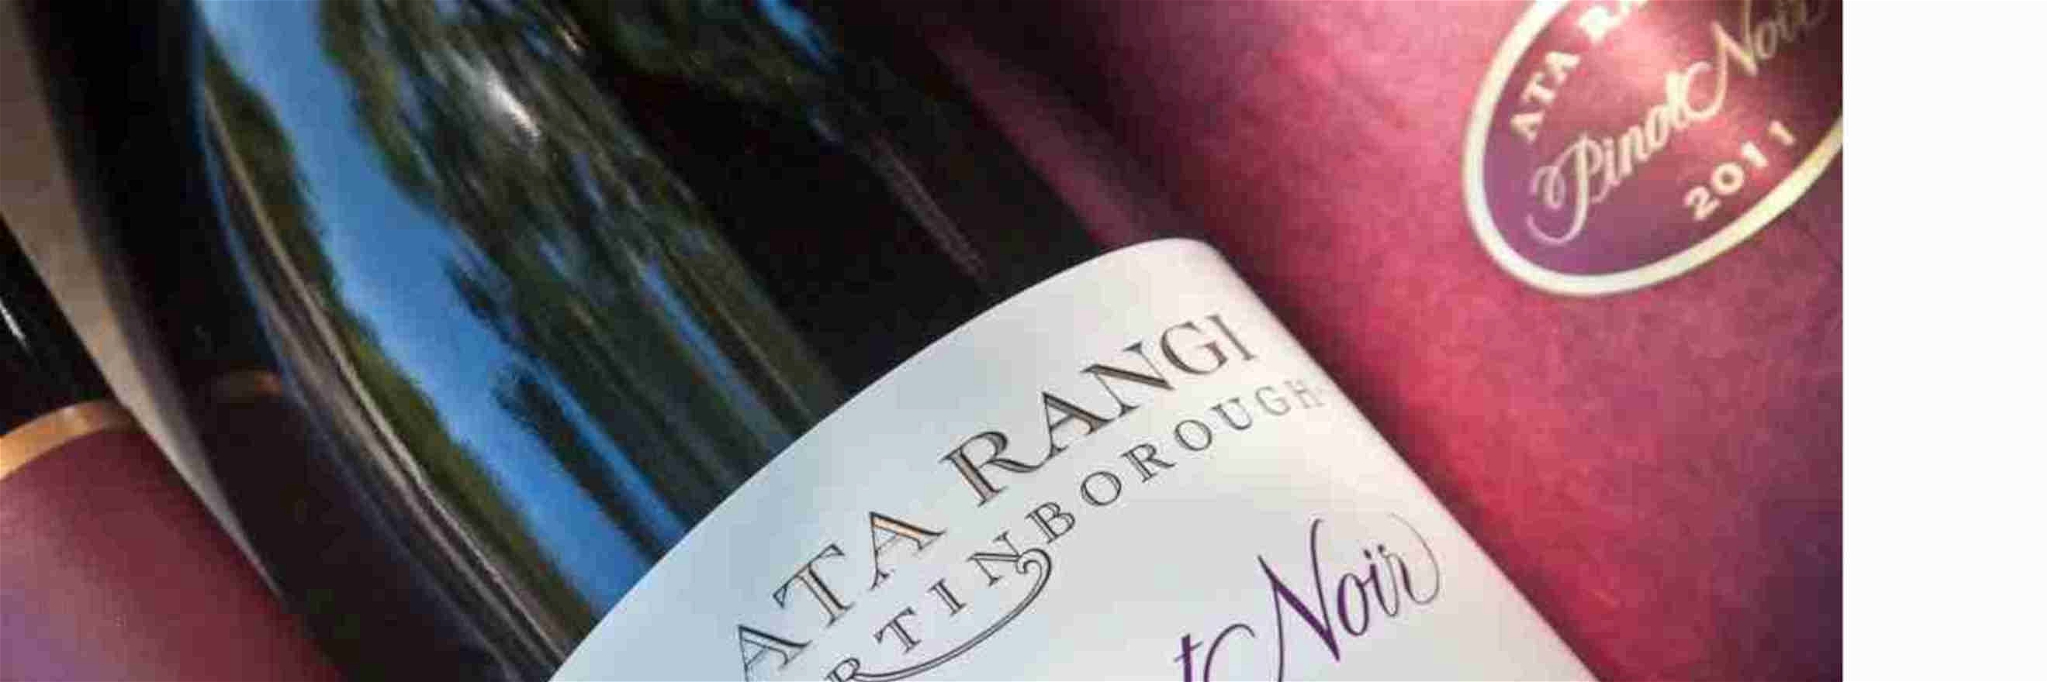 Ata Rangi Pinot Noir from Martinborough, New Zealand